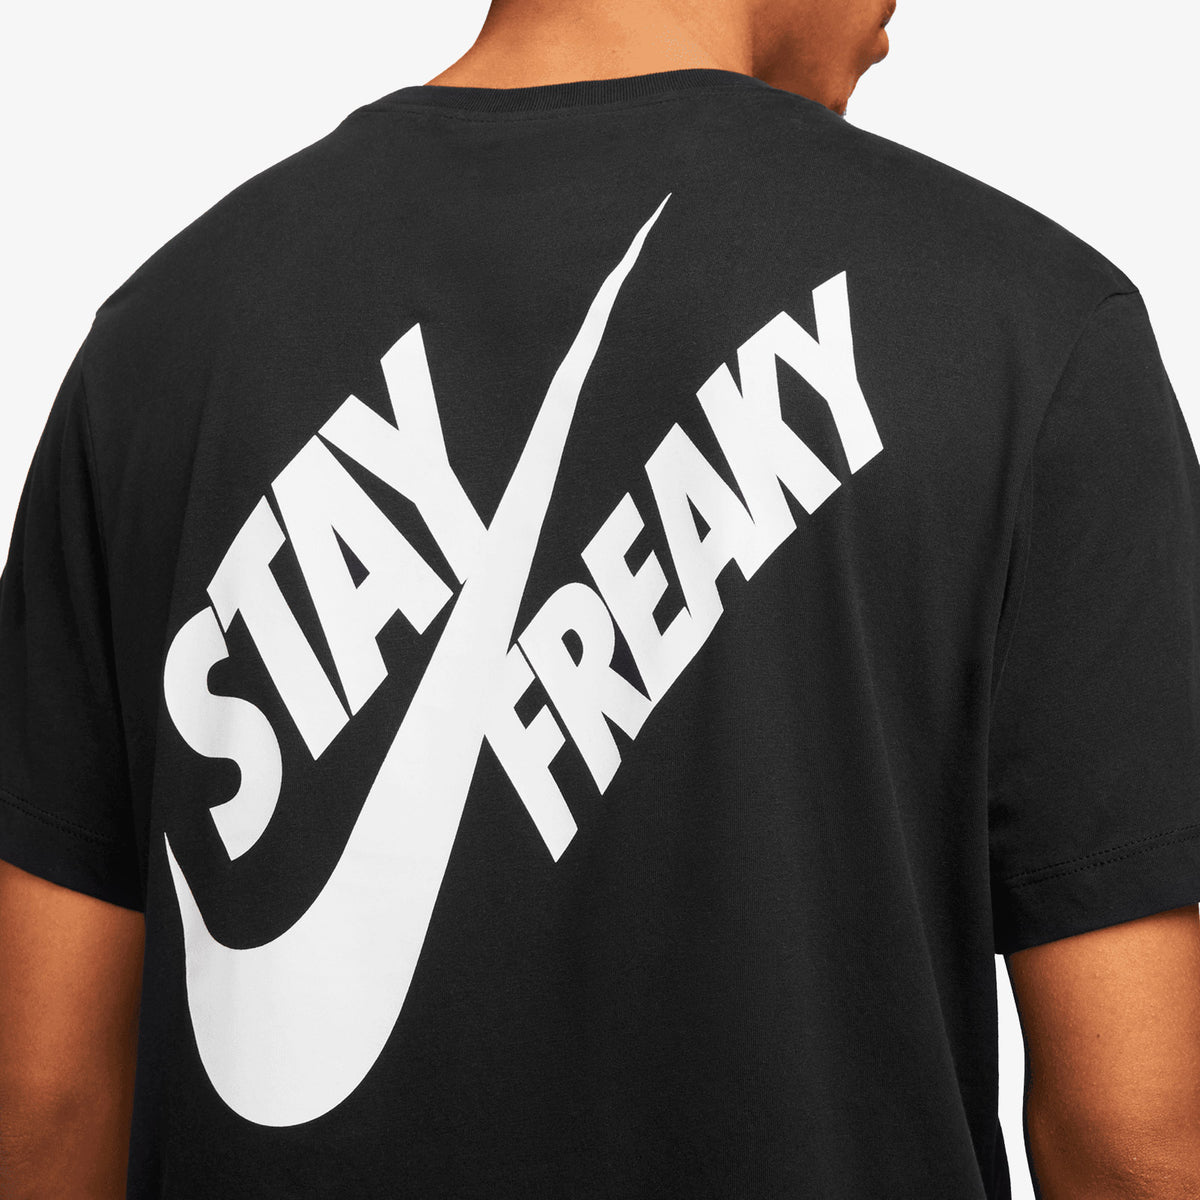  Nike Giannis Swoosh Freak Men's Basketball T-Shirt